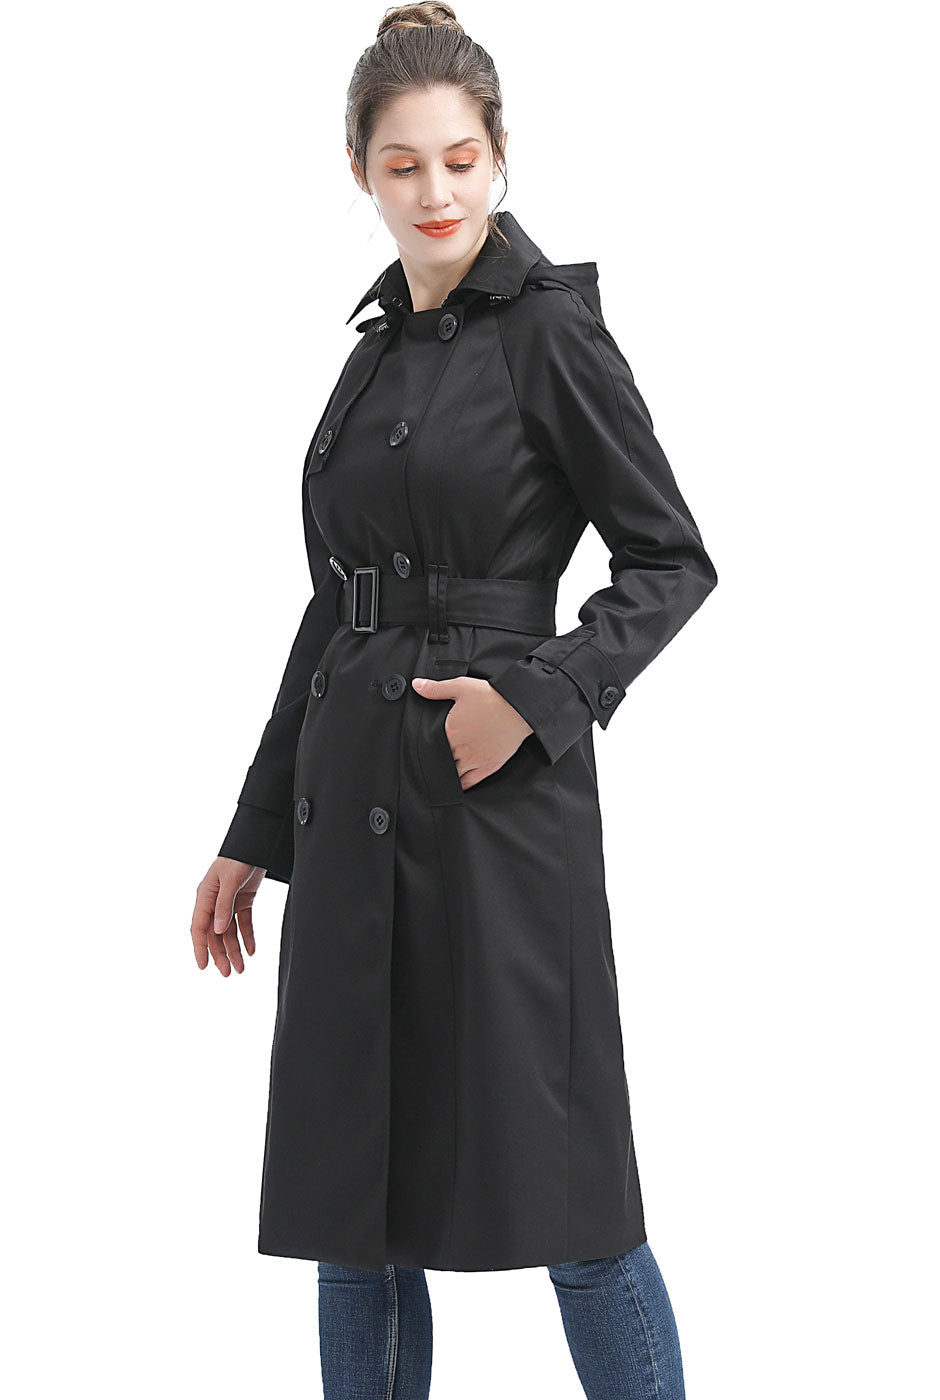 BGSD Women 3/4 Length Waterproof Hooded Trench Coat